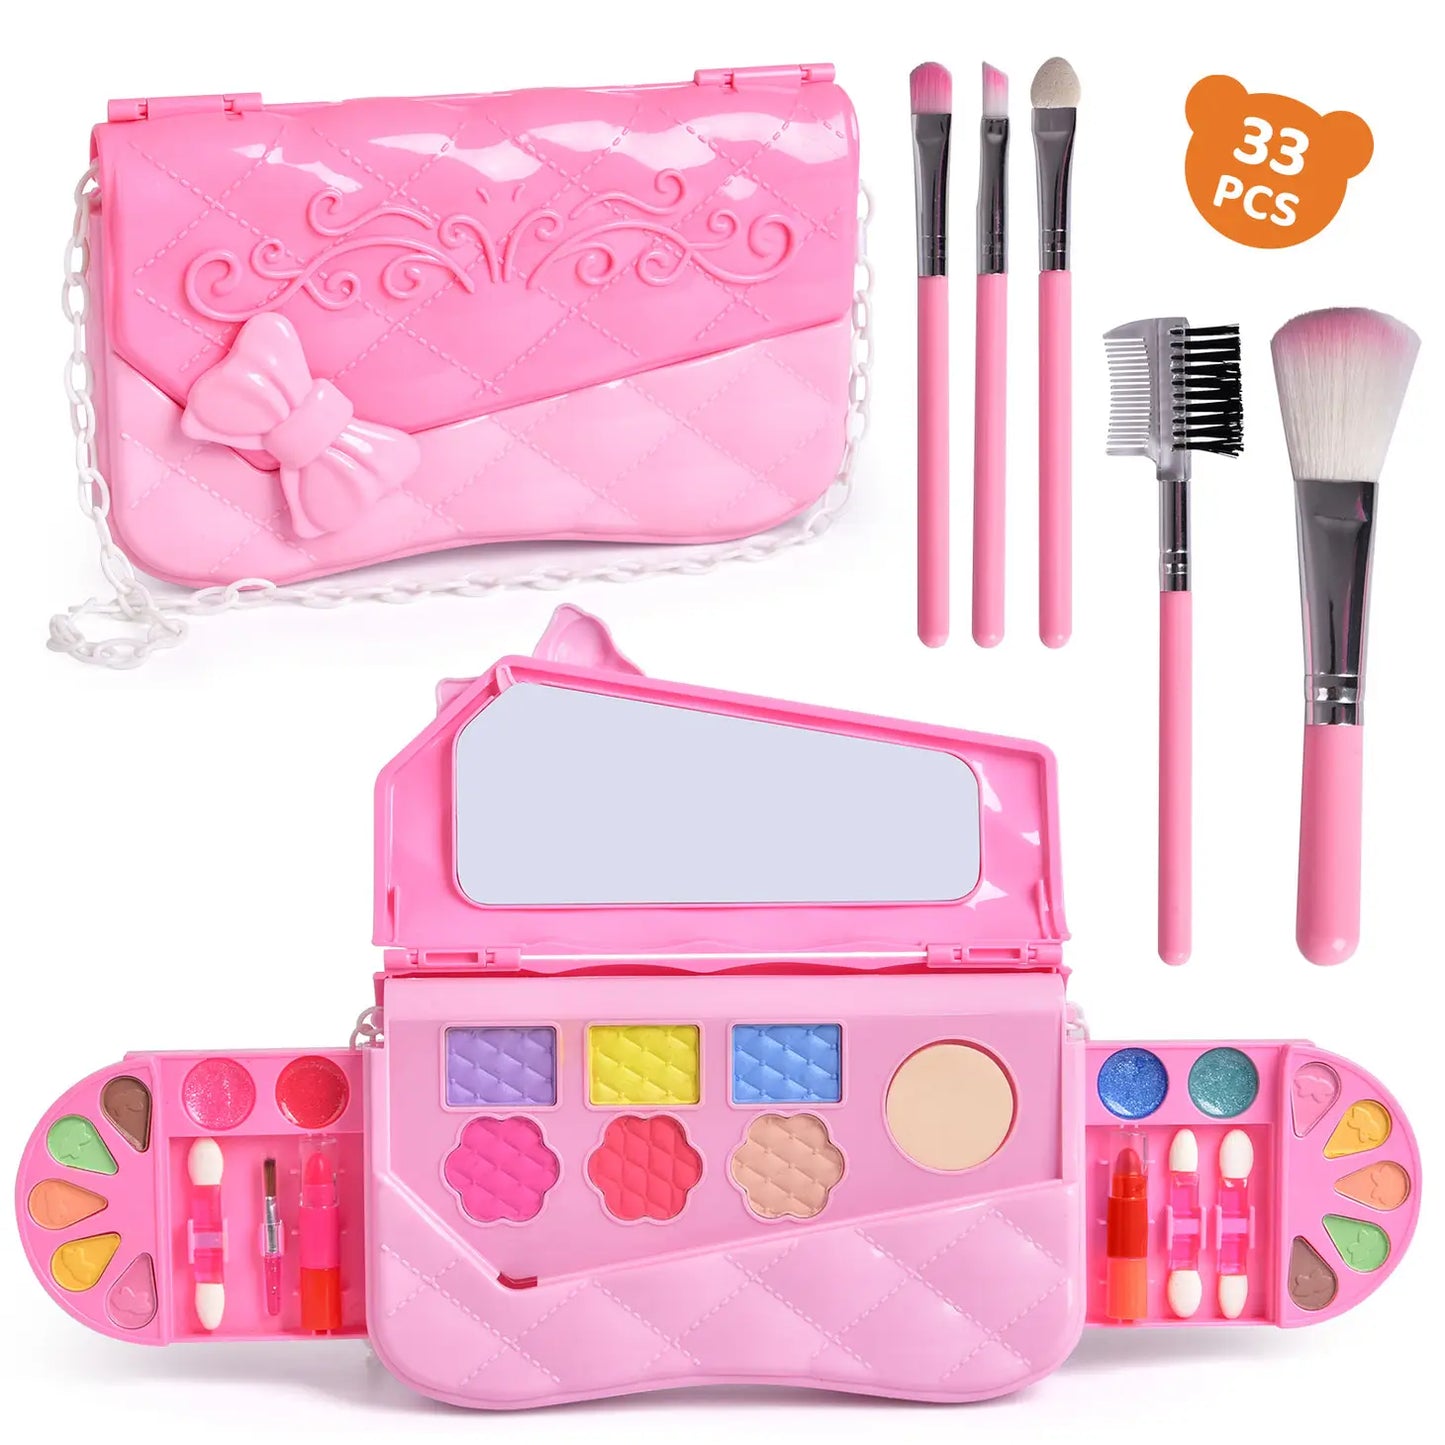 Kids' 33-Pc Washable Makeup Kit - Pretend Play Set